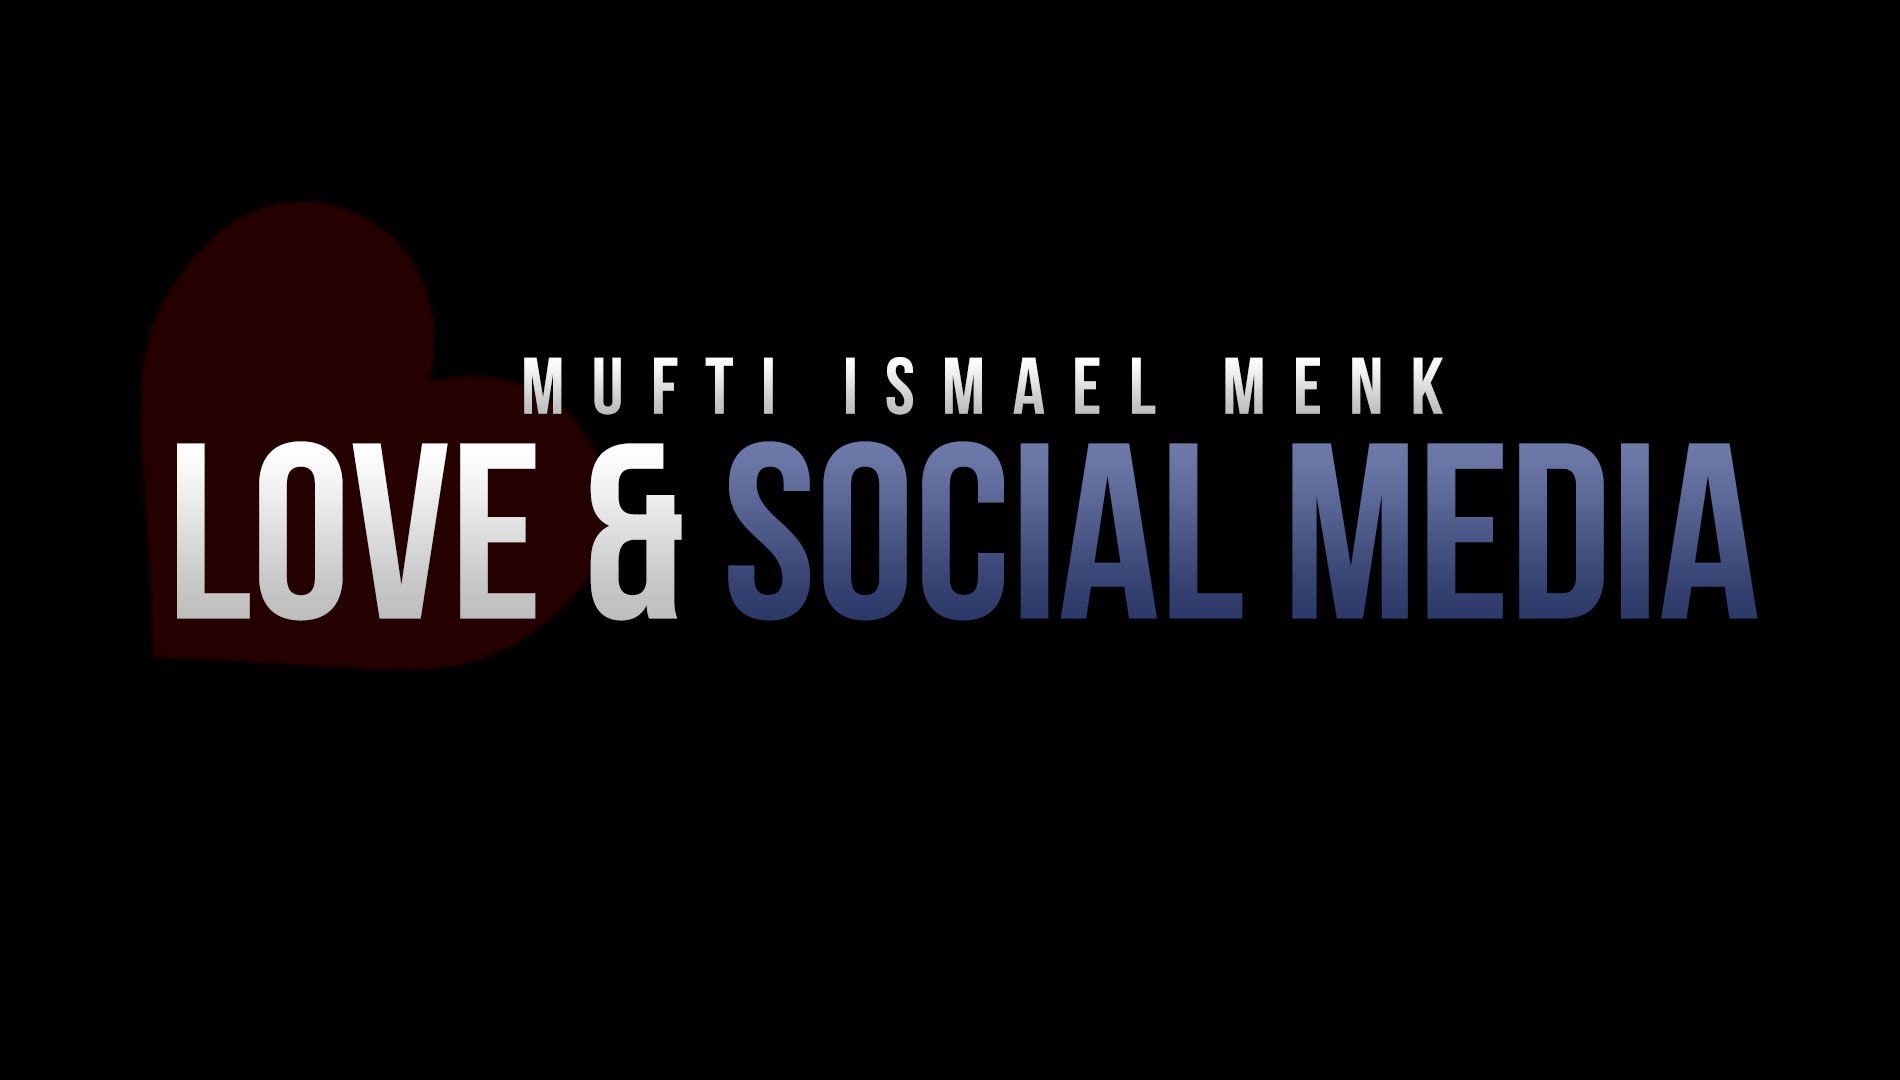 Love & Social Media - Mufti Ismael Menk - Reminder